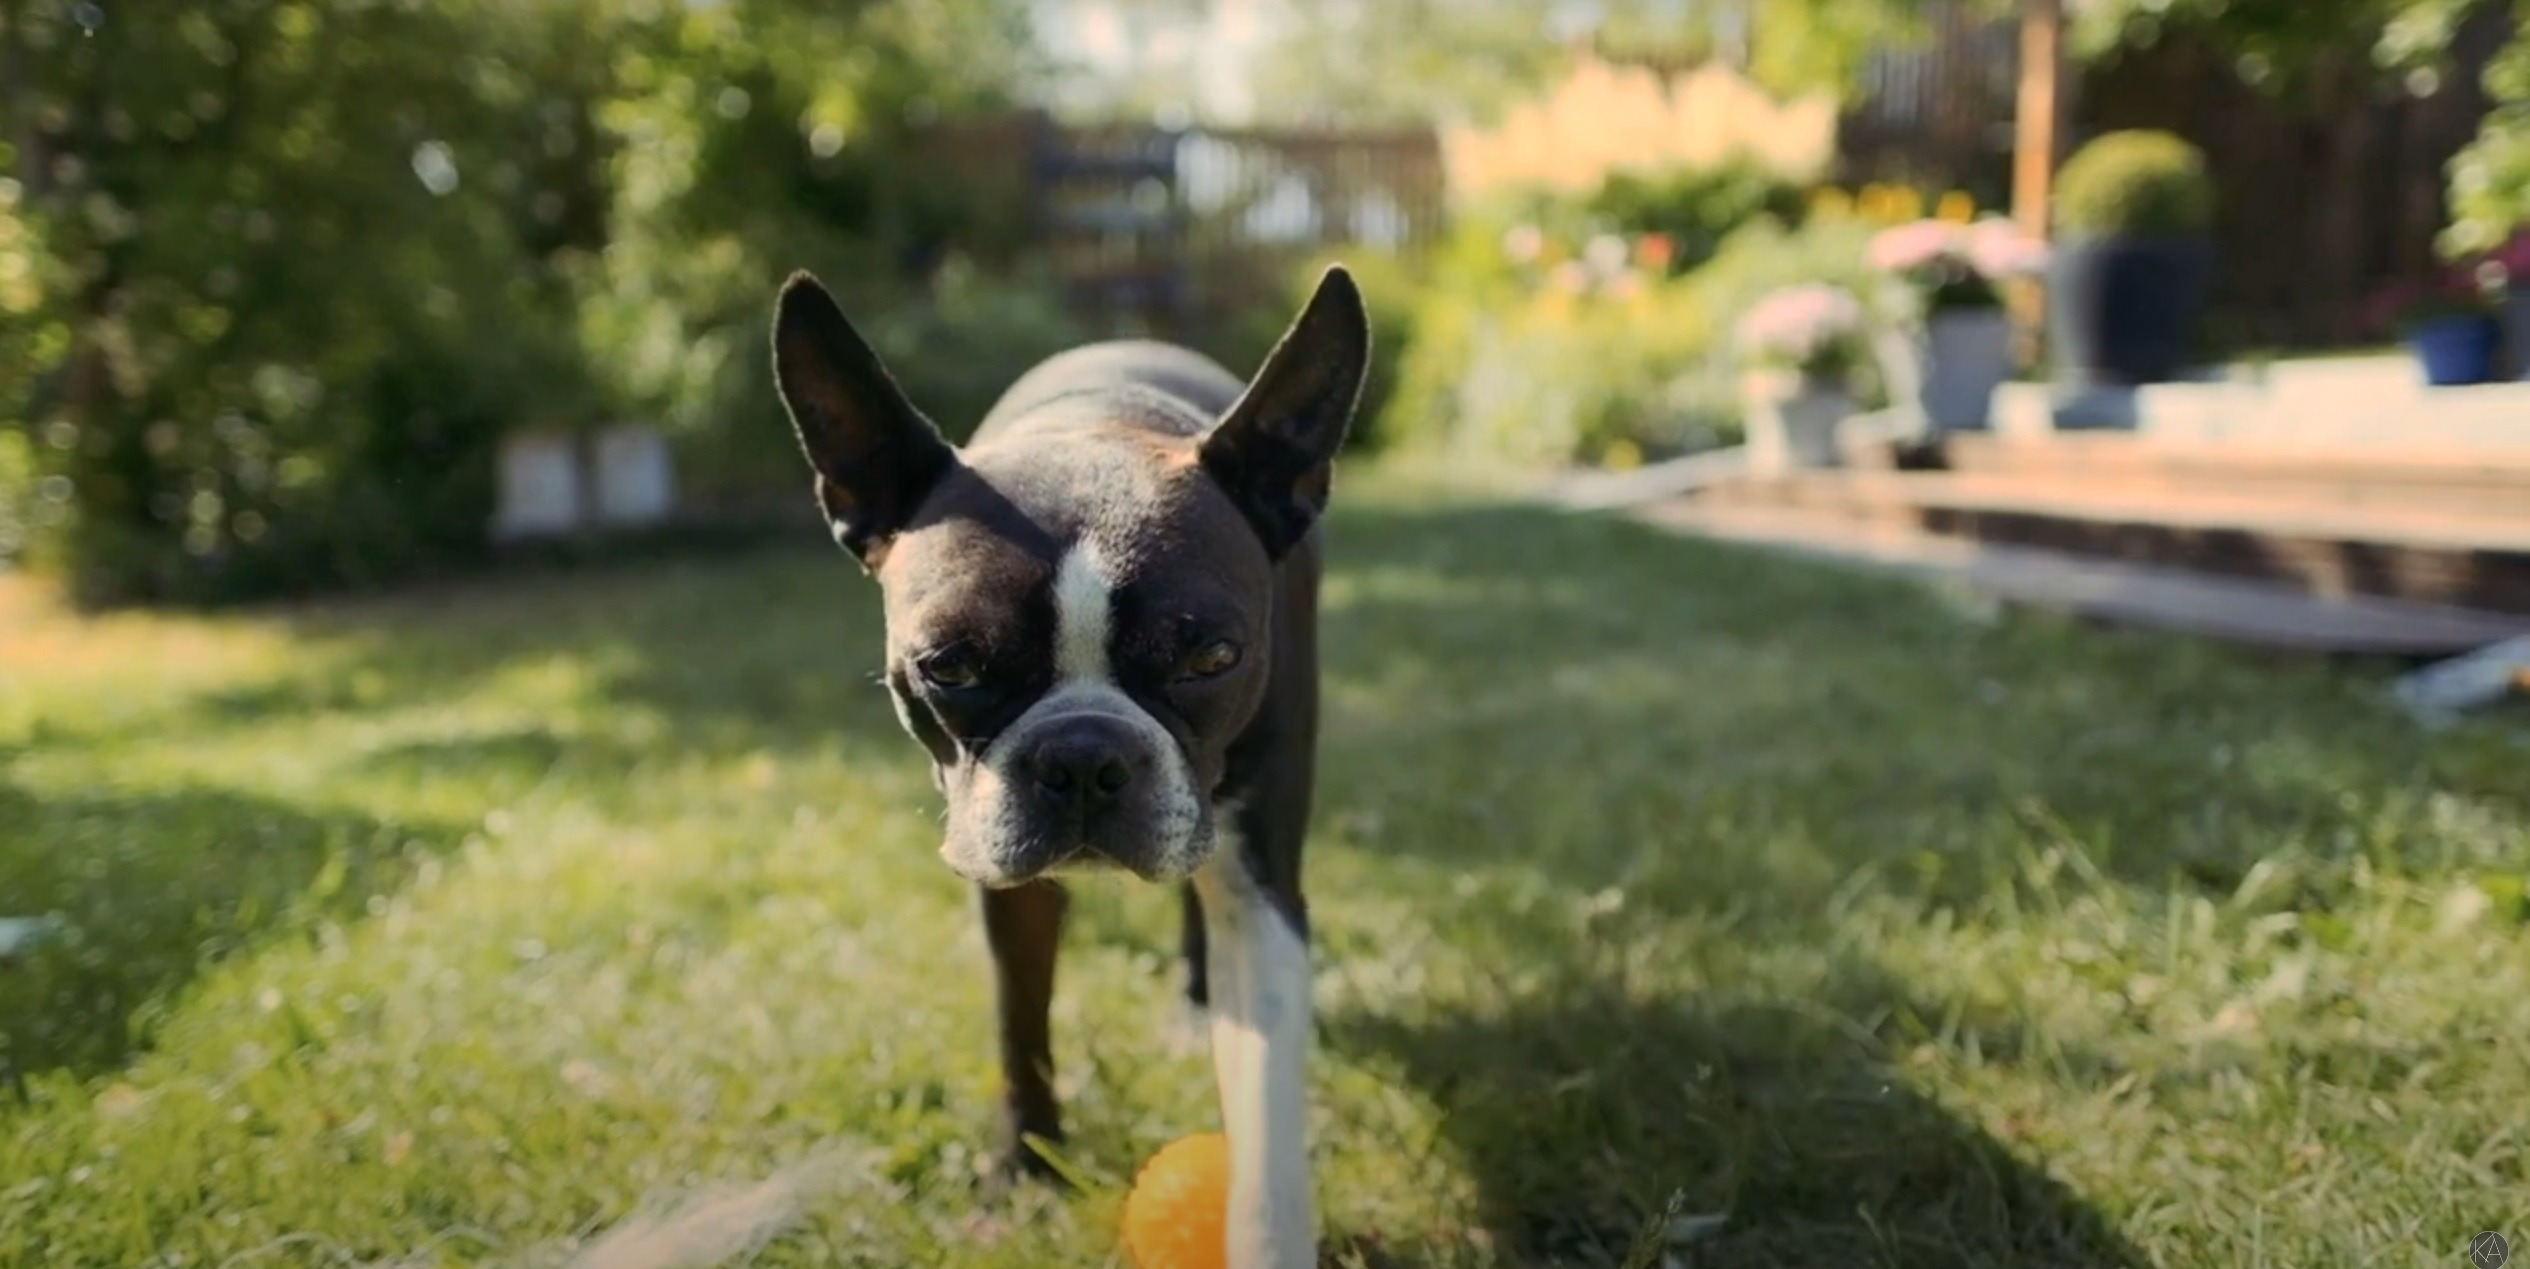 a Boston Terrier's joy in a lush backyard. Playful walk and focused gaze